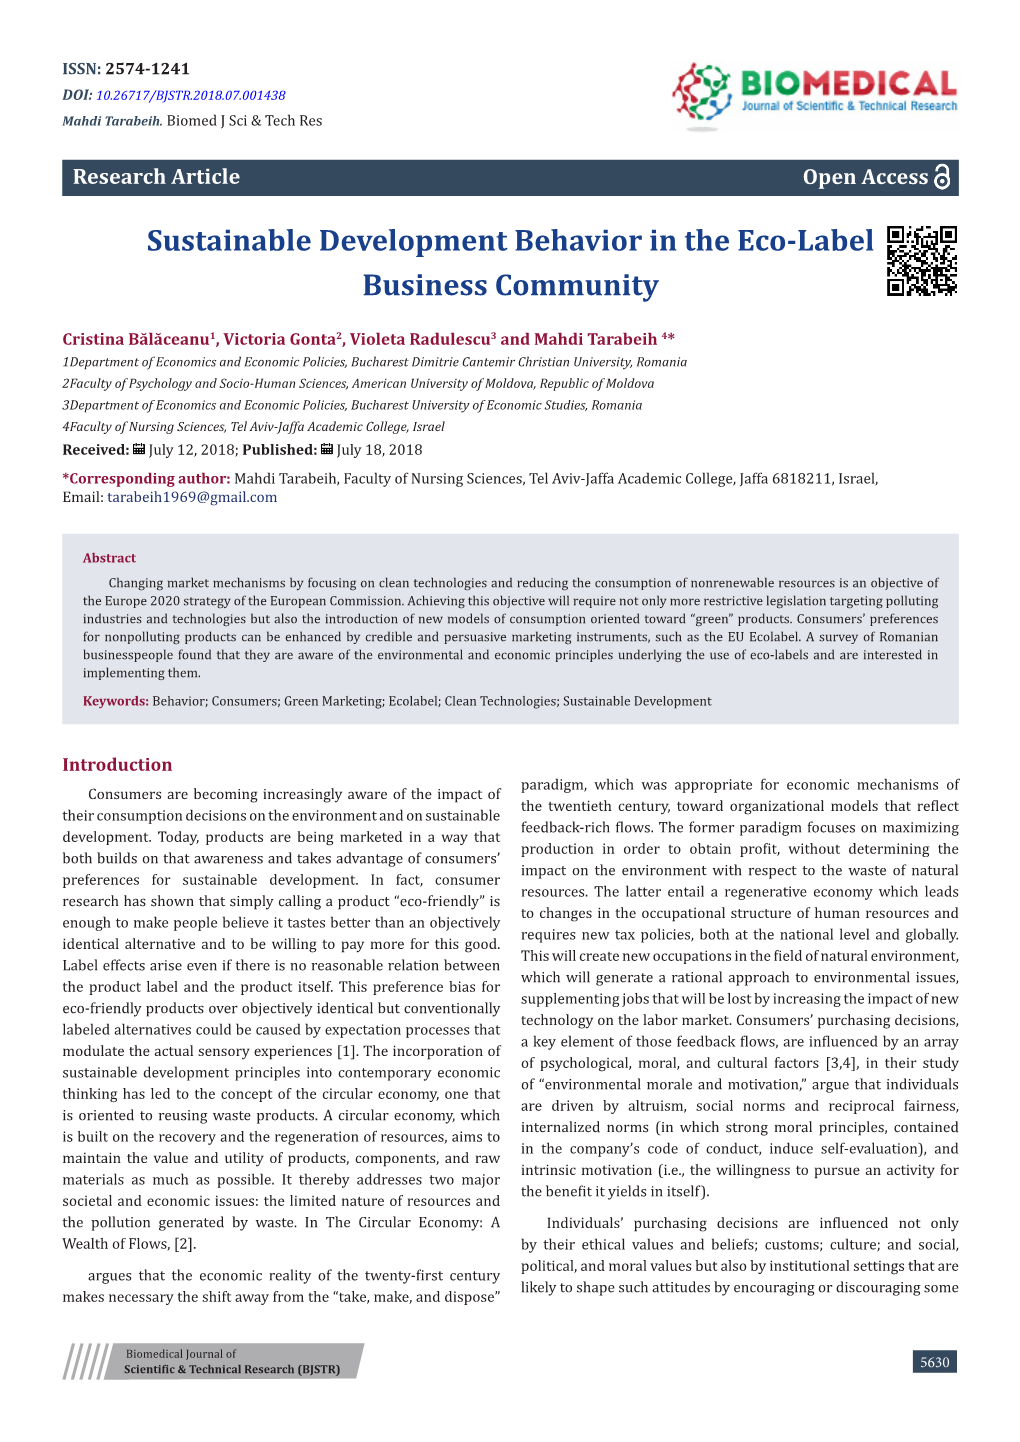 Sustainable Development Behavior in the Eco-Label Business Community